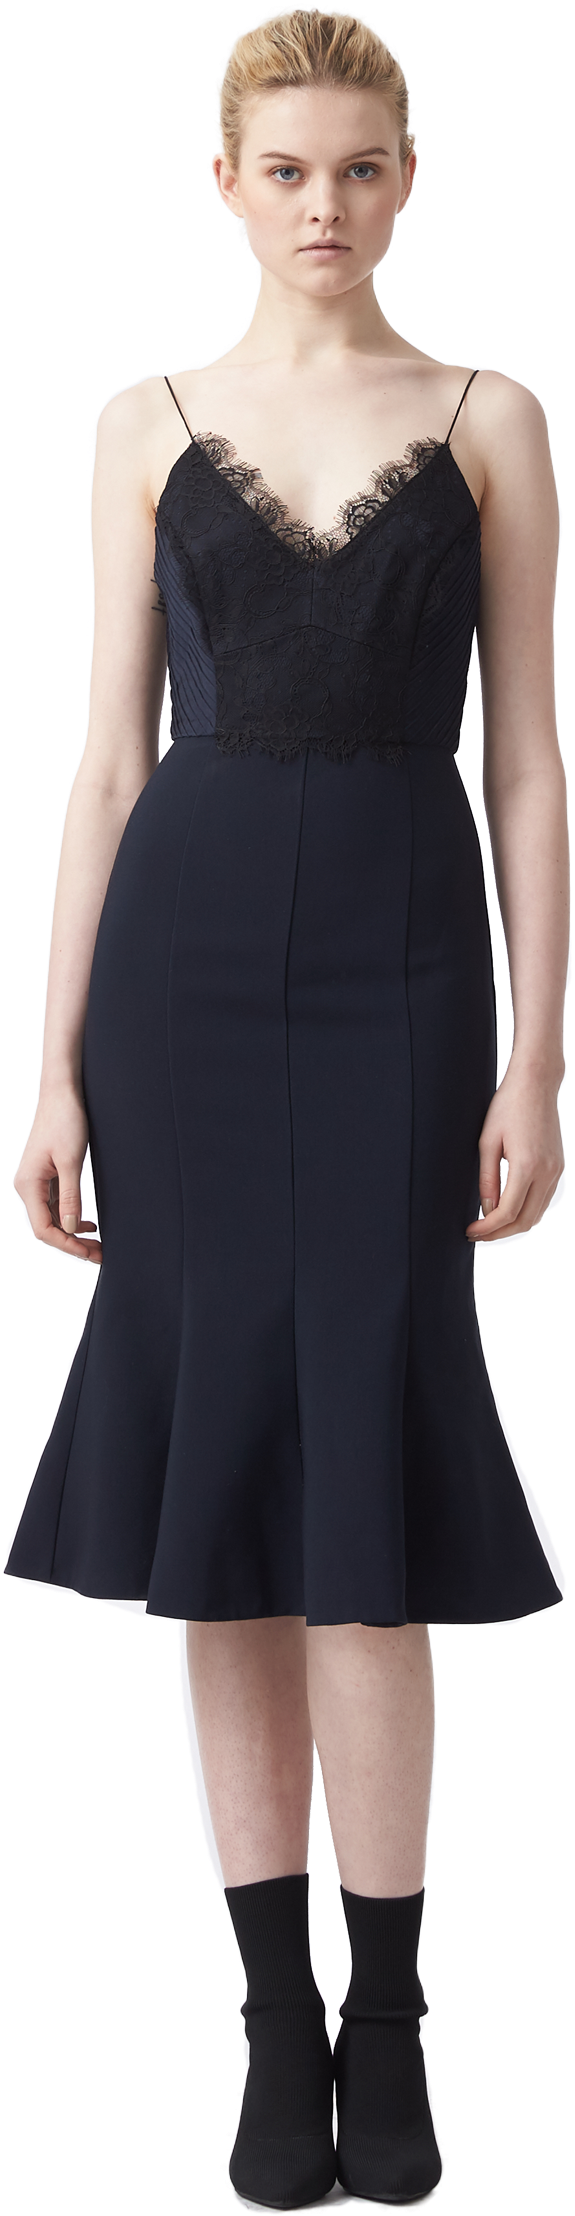 Godiva Lace - Meghan Markle Black Halo Dress (1080x2500), Png Download